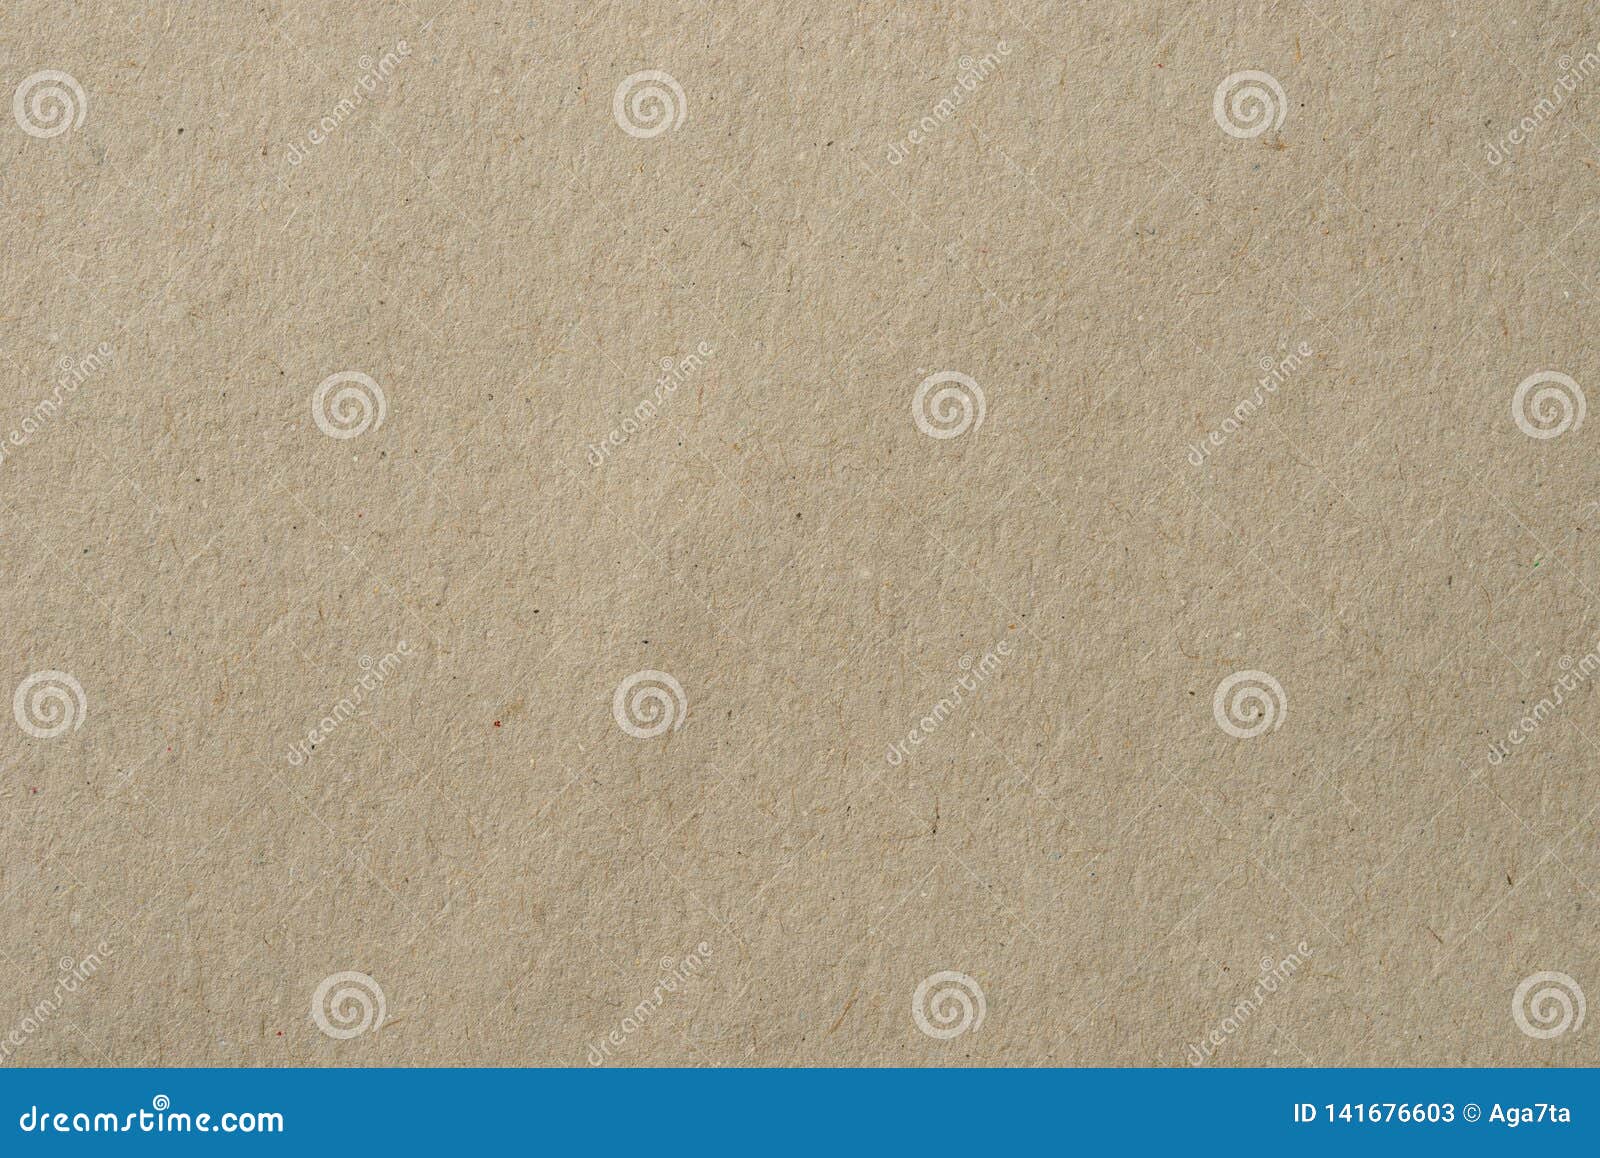 Cardboard Texture. Brown Cardboard Background. Empty Carton With ...